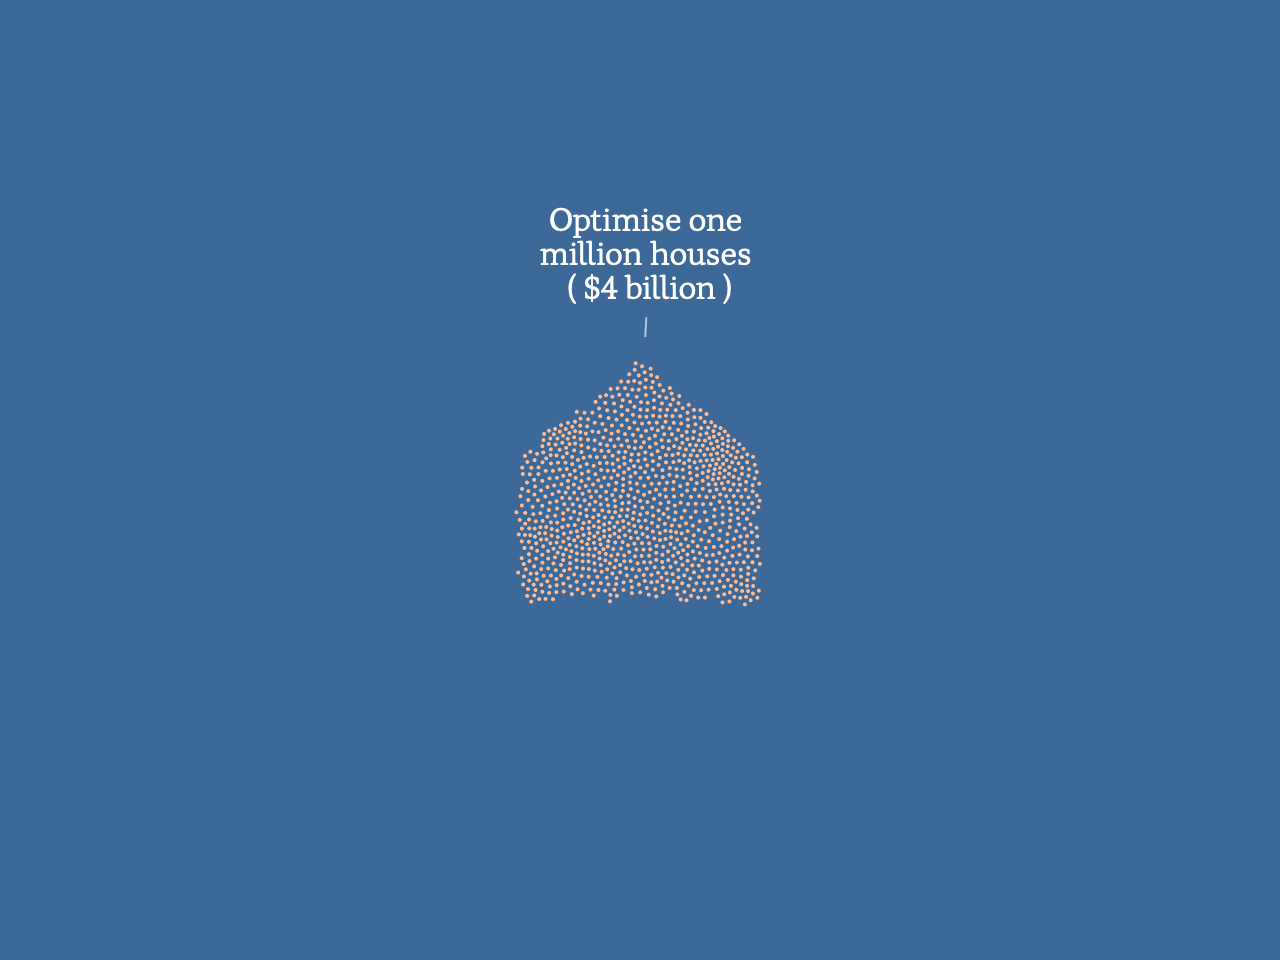 Optimise 1 million houses: $4 billion